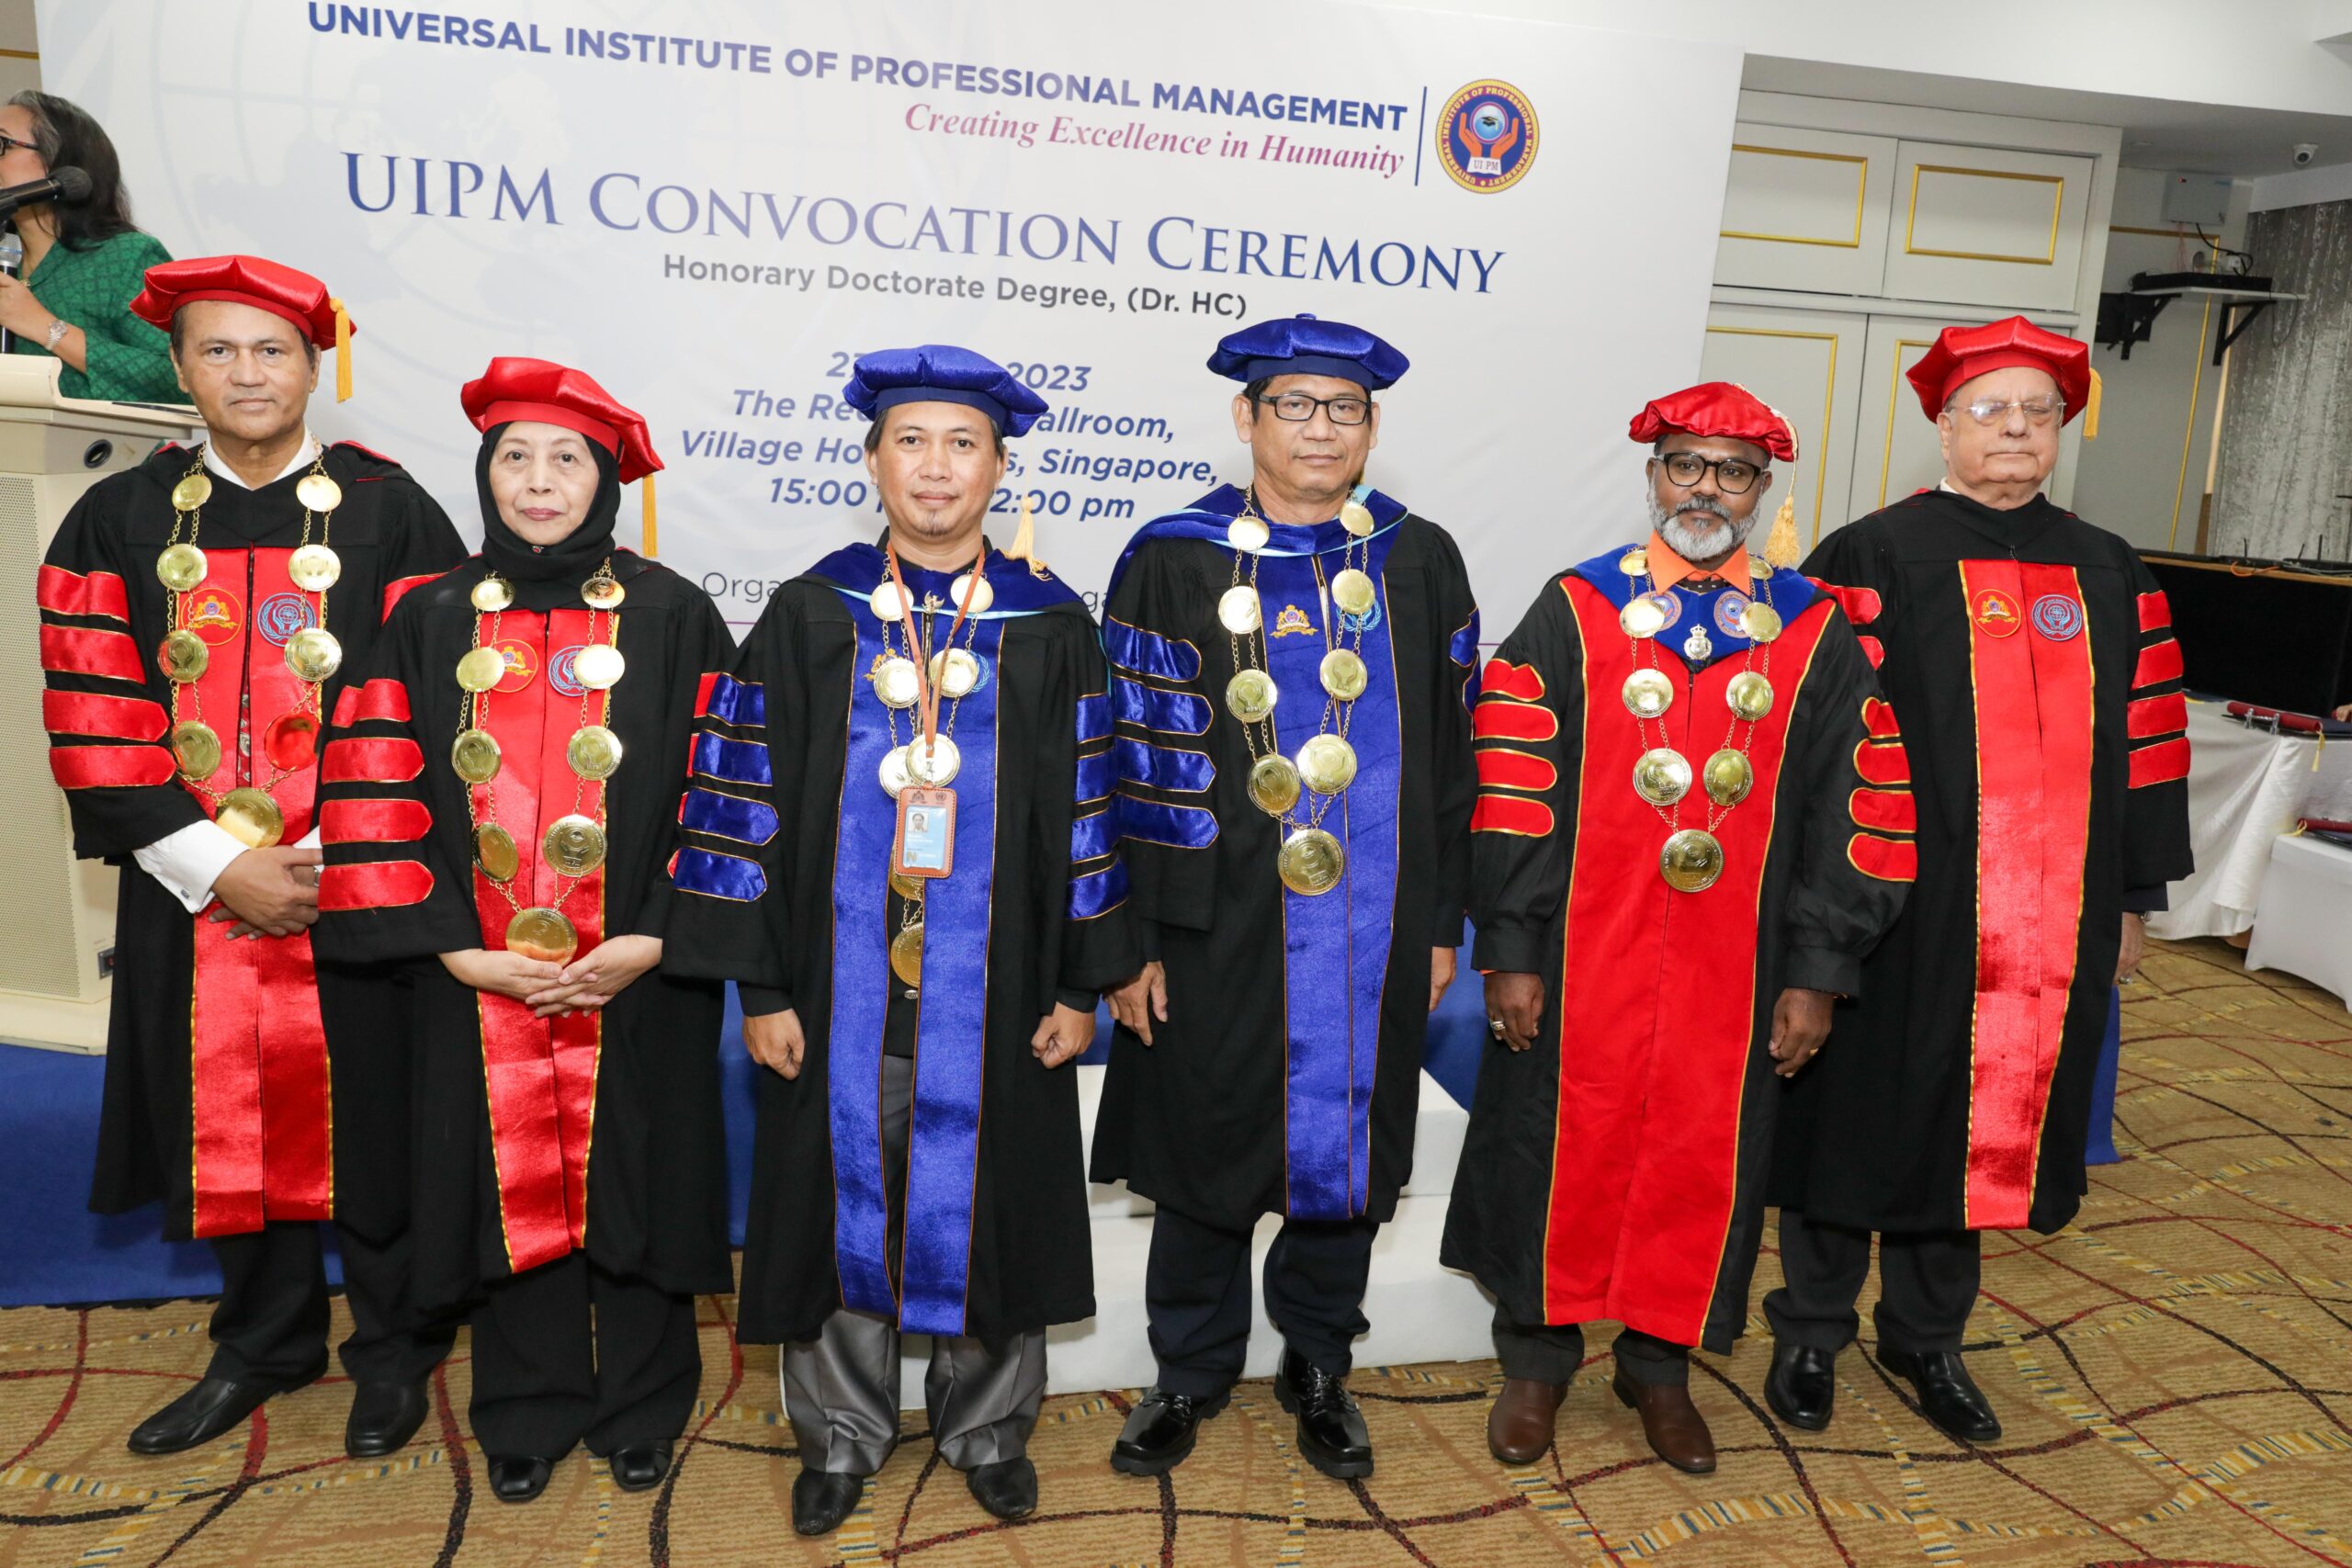 DG4A7488 UIPM Professors 1 scaled